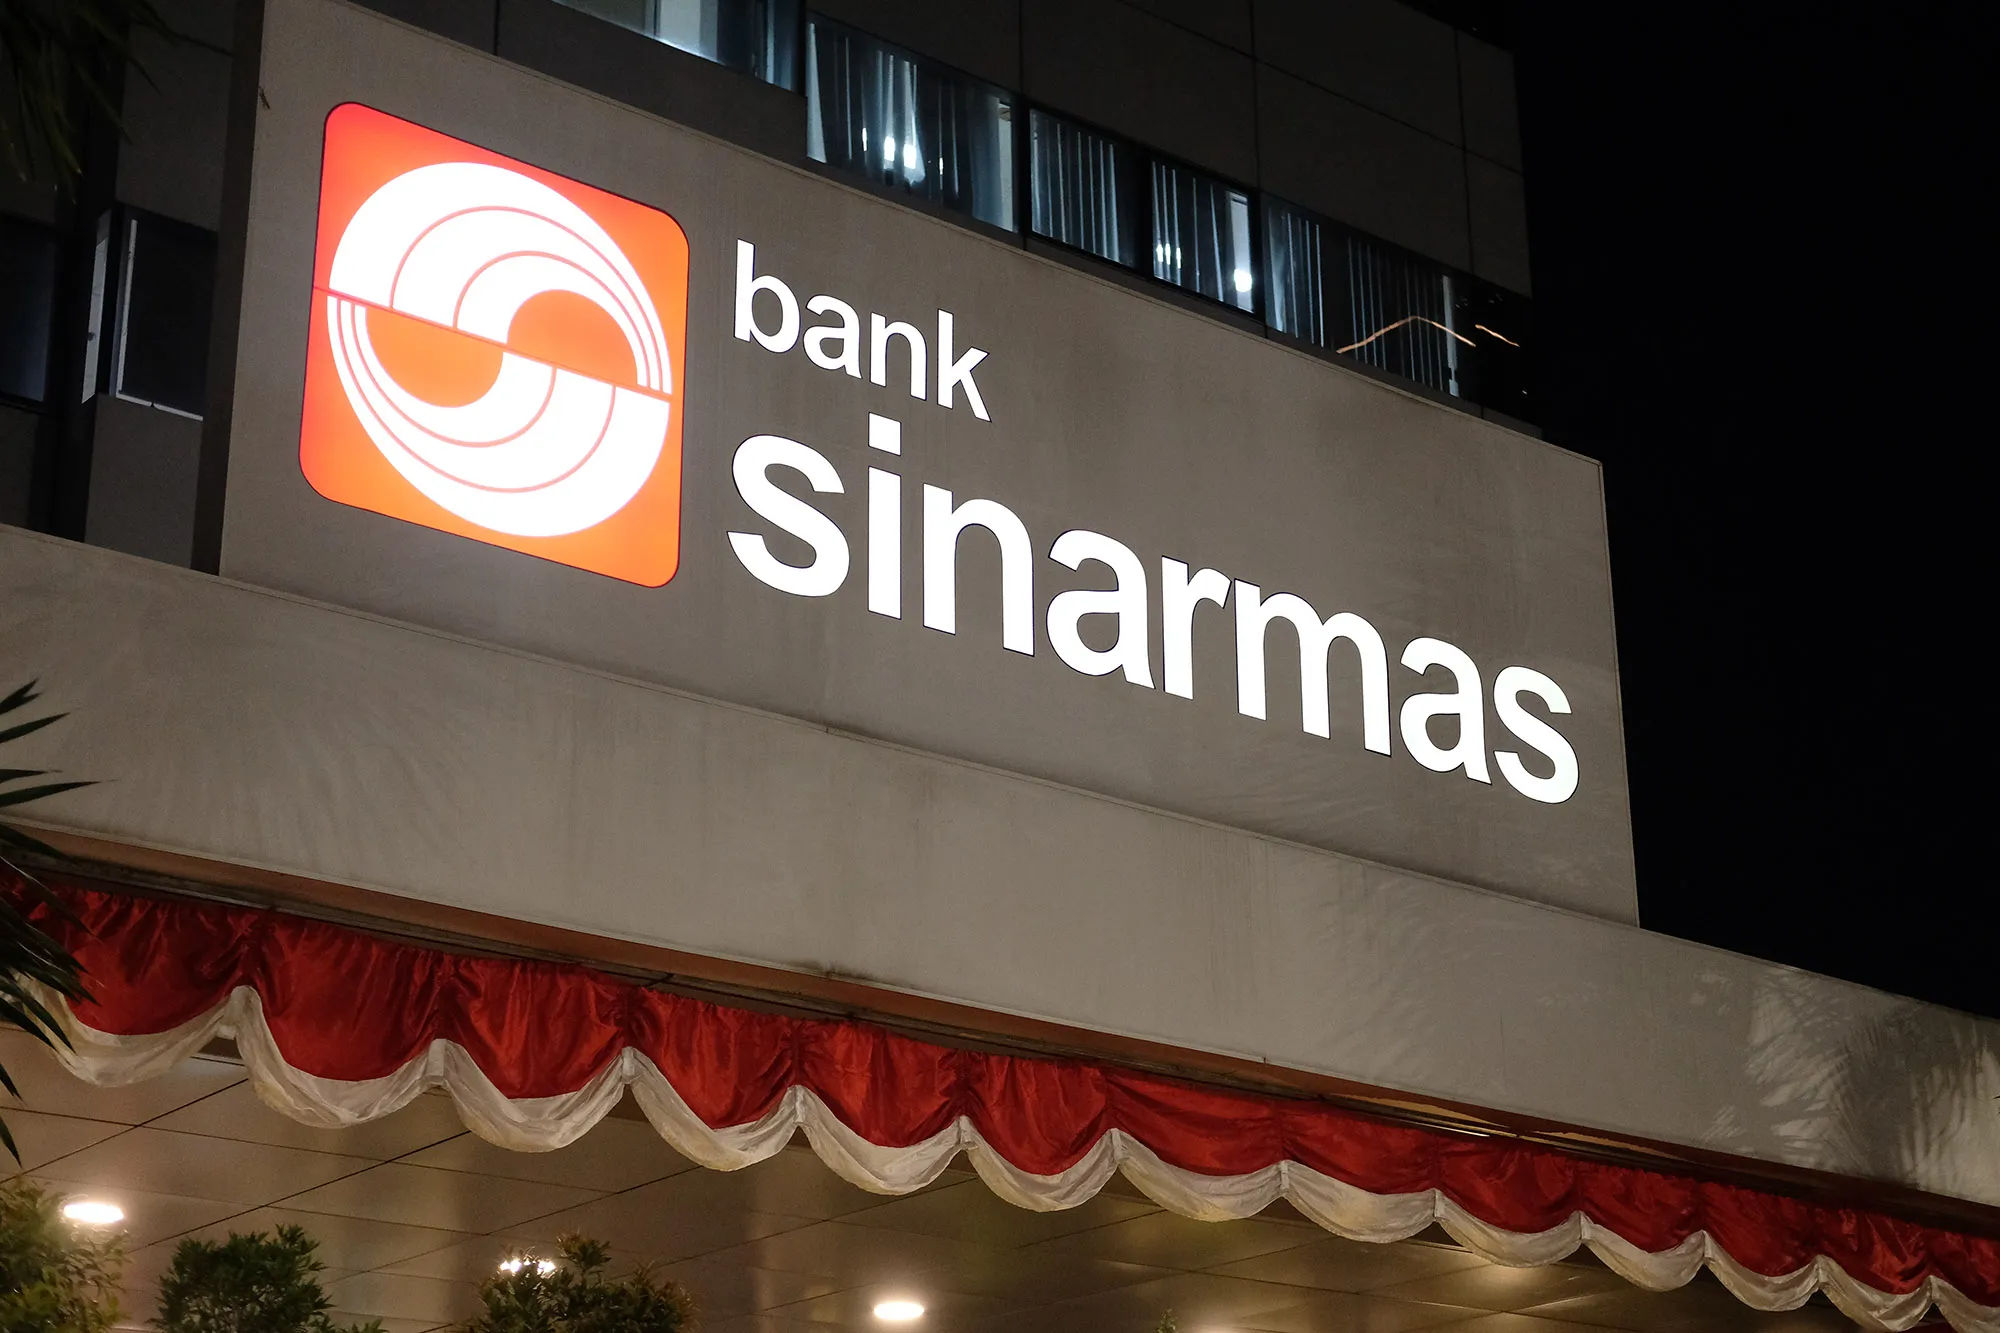 Bank Sinarmas